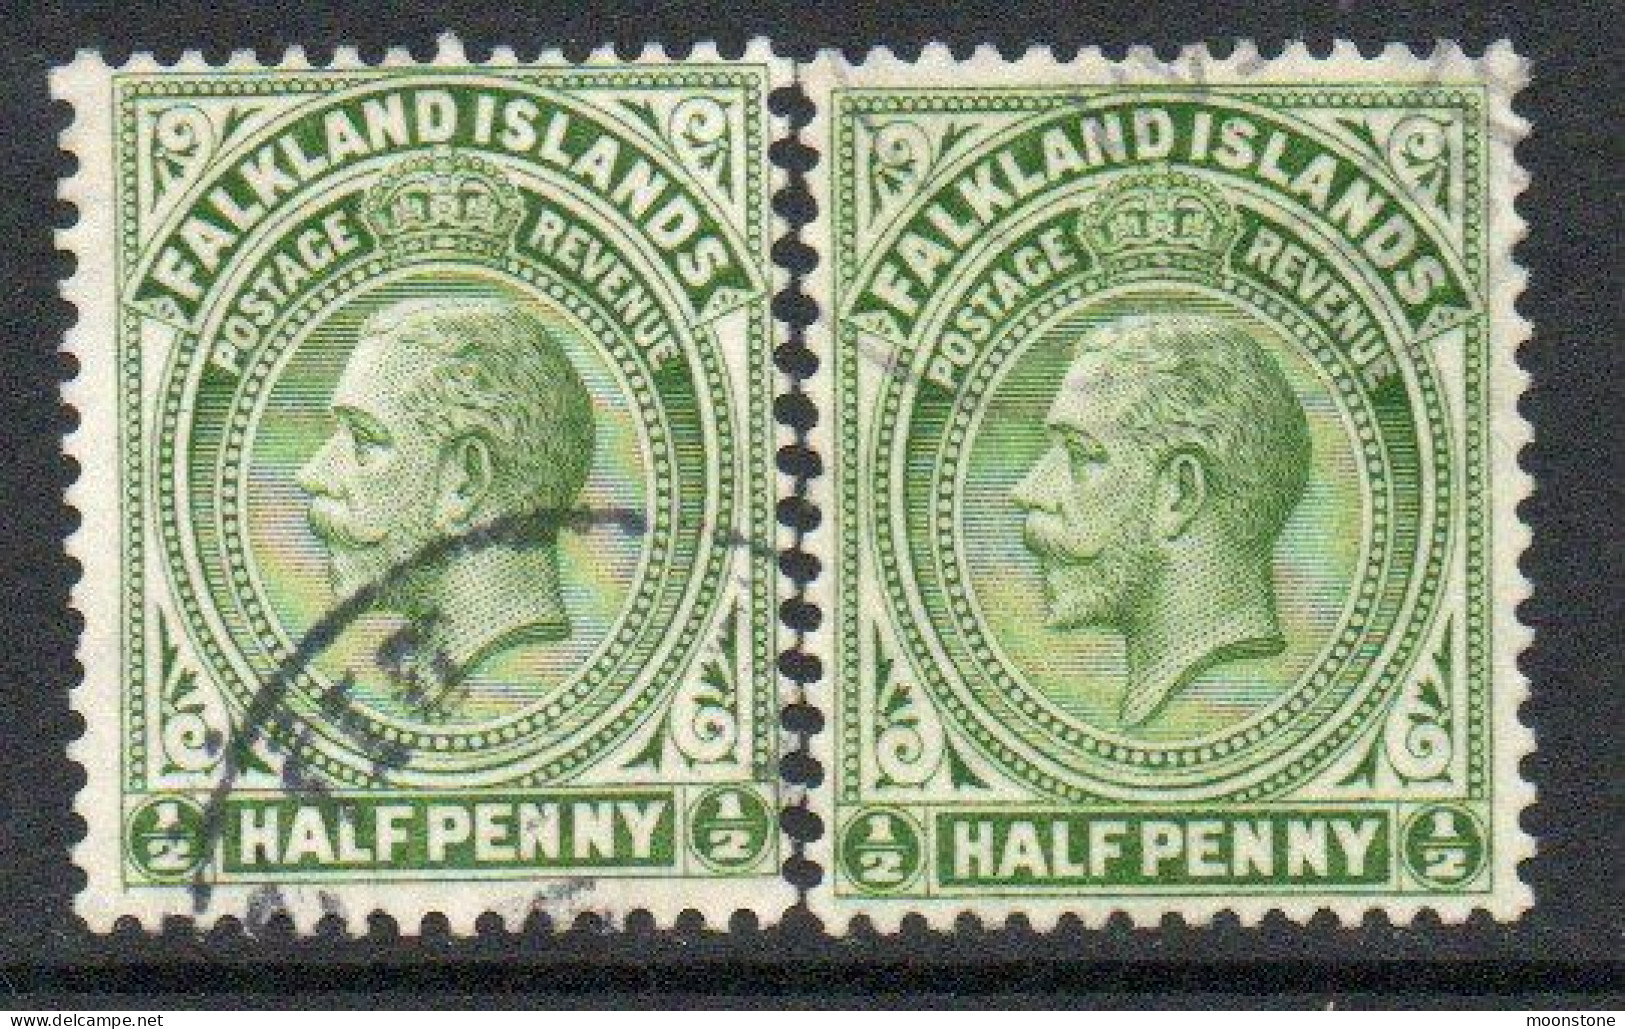 Falkland Islands GV 1912-20 ½d Yellow-green Definitive, Comb Perf, Wmk. Multiple Crown CA, 2x Shades, Used, SG 60 - Islas Malvinas